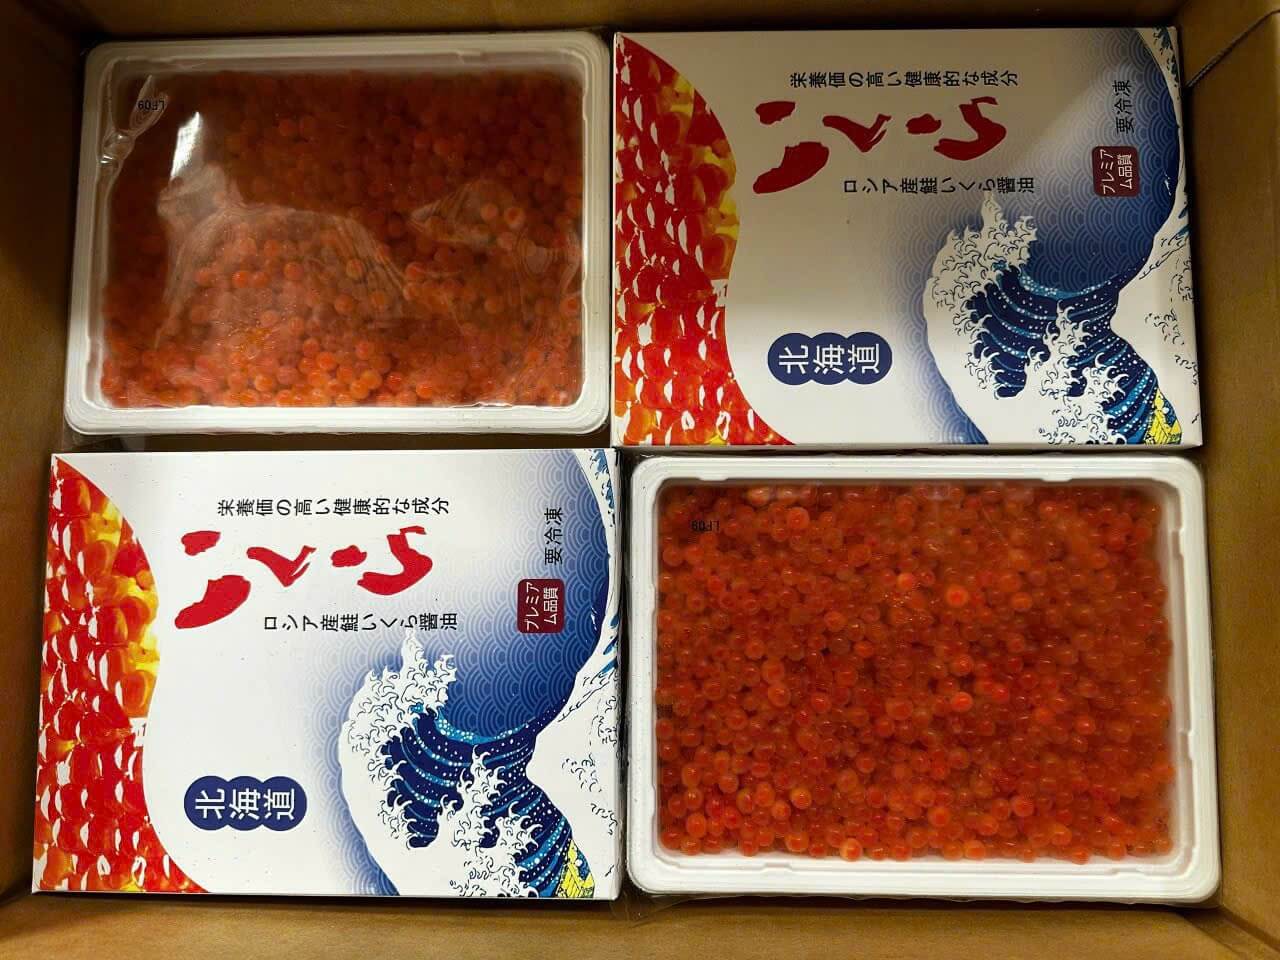 Trứng cá hồi / IKURA SHIO / 塩いくら 木箱入